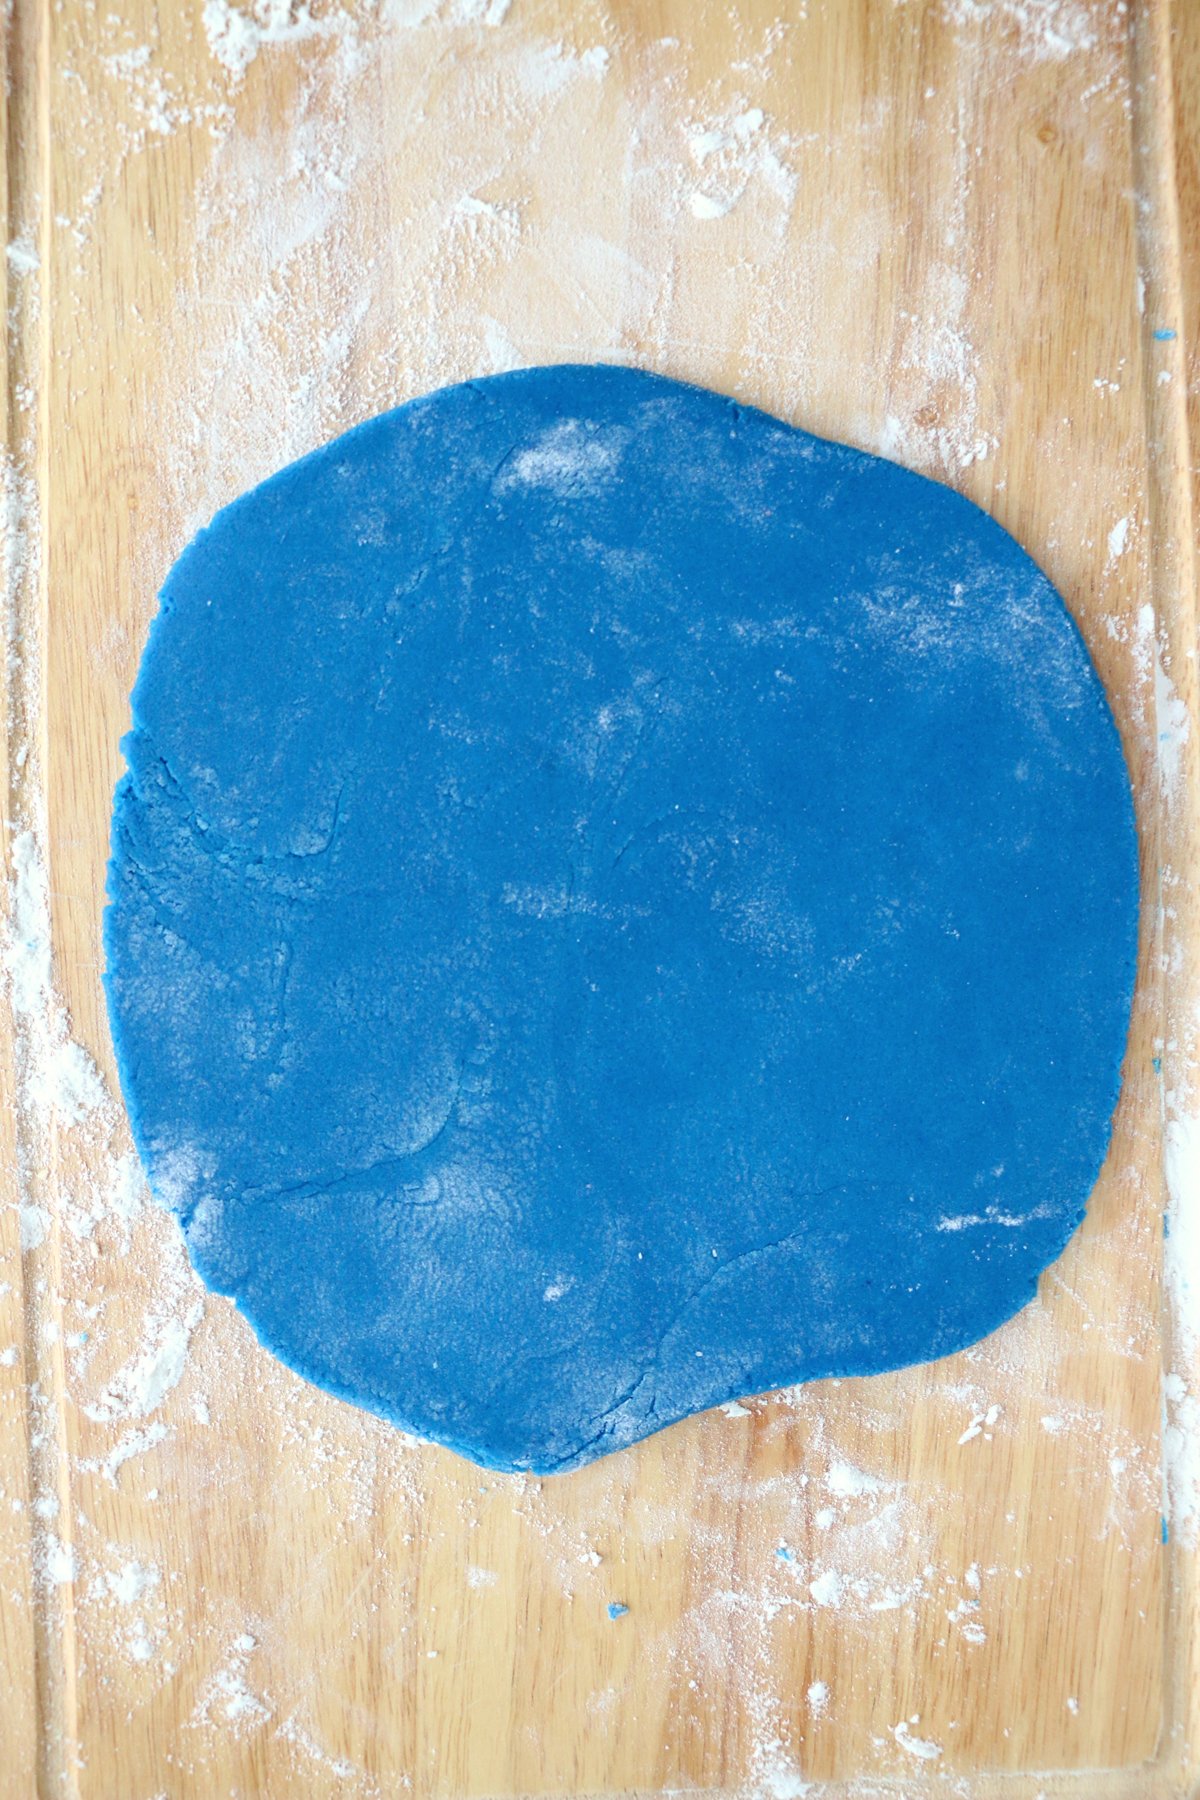 square of blue sugar cookie dough